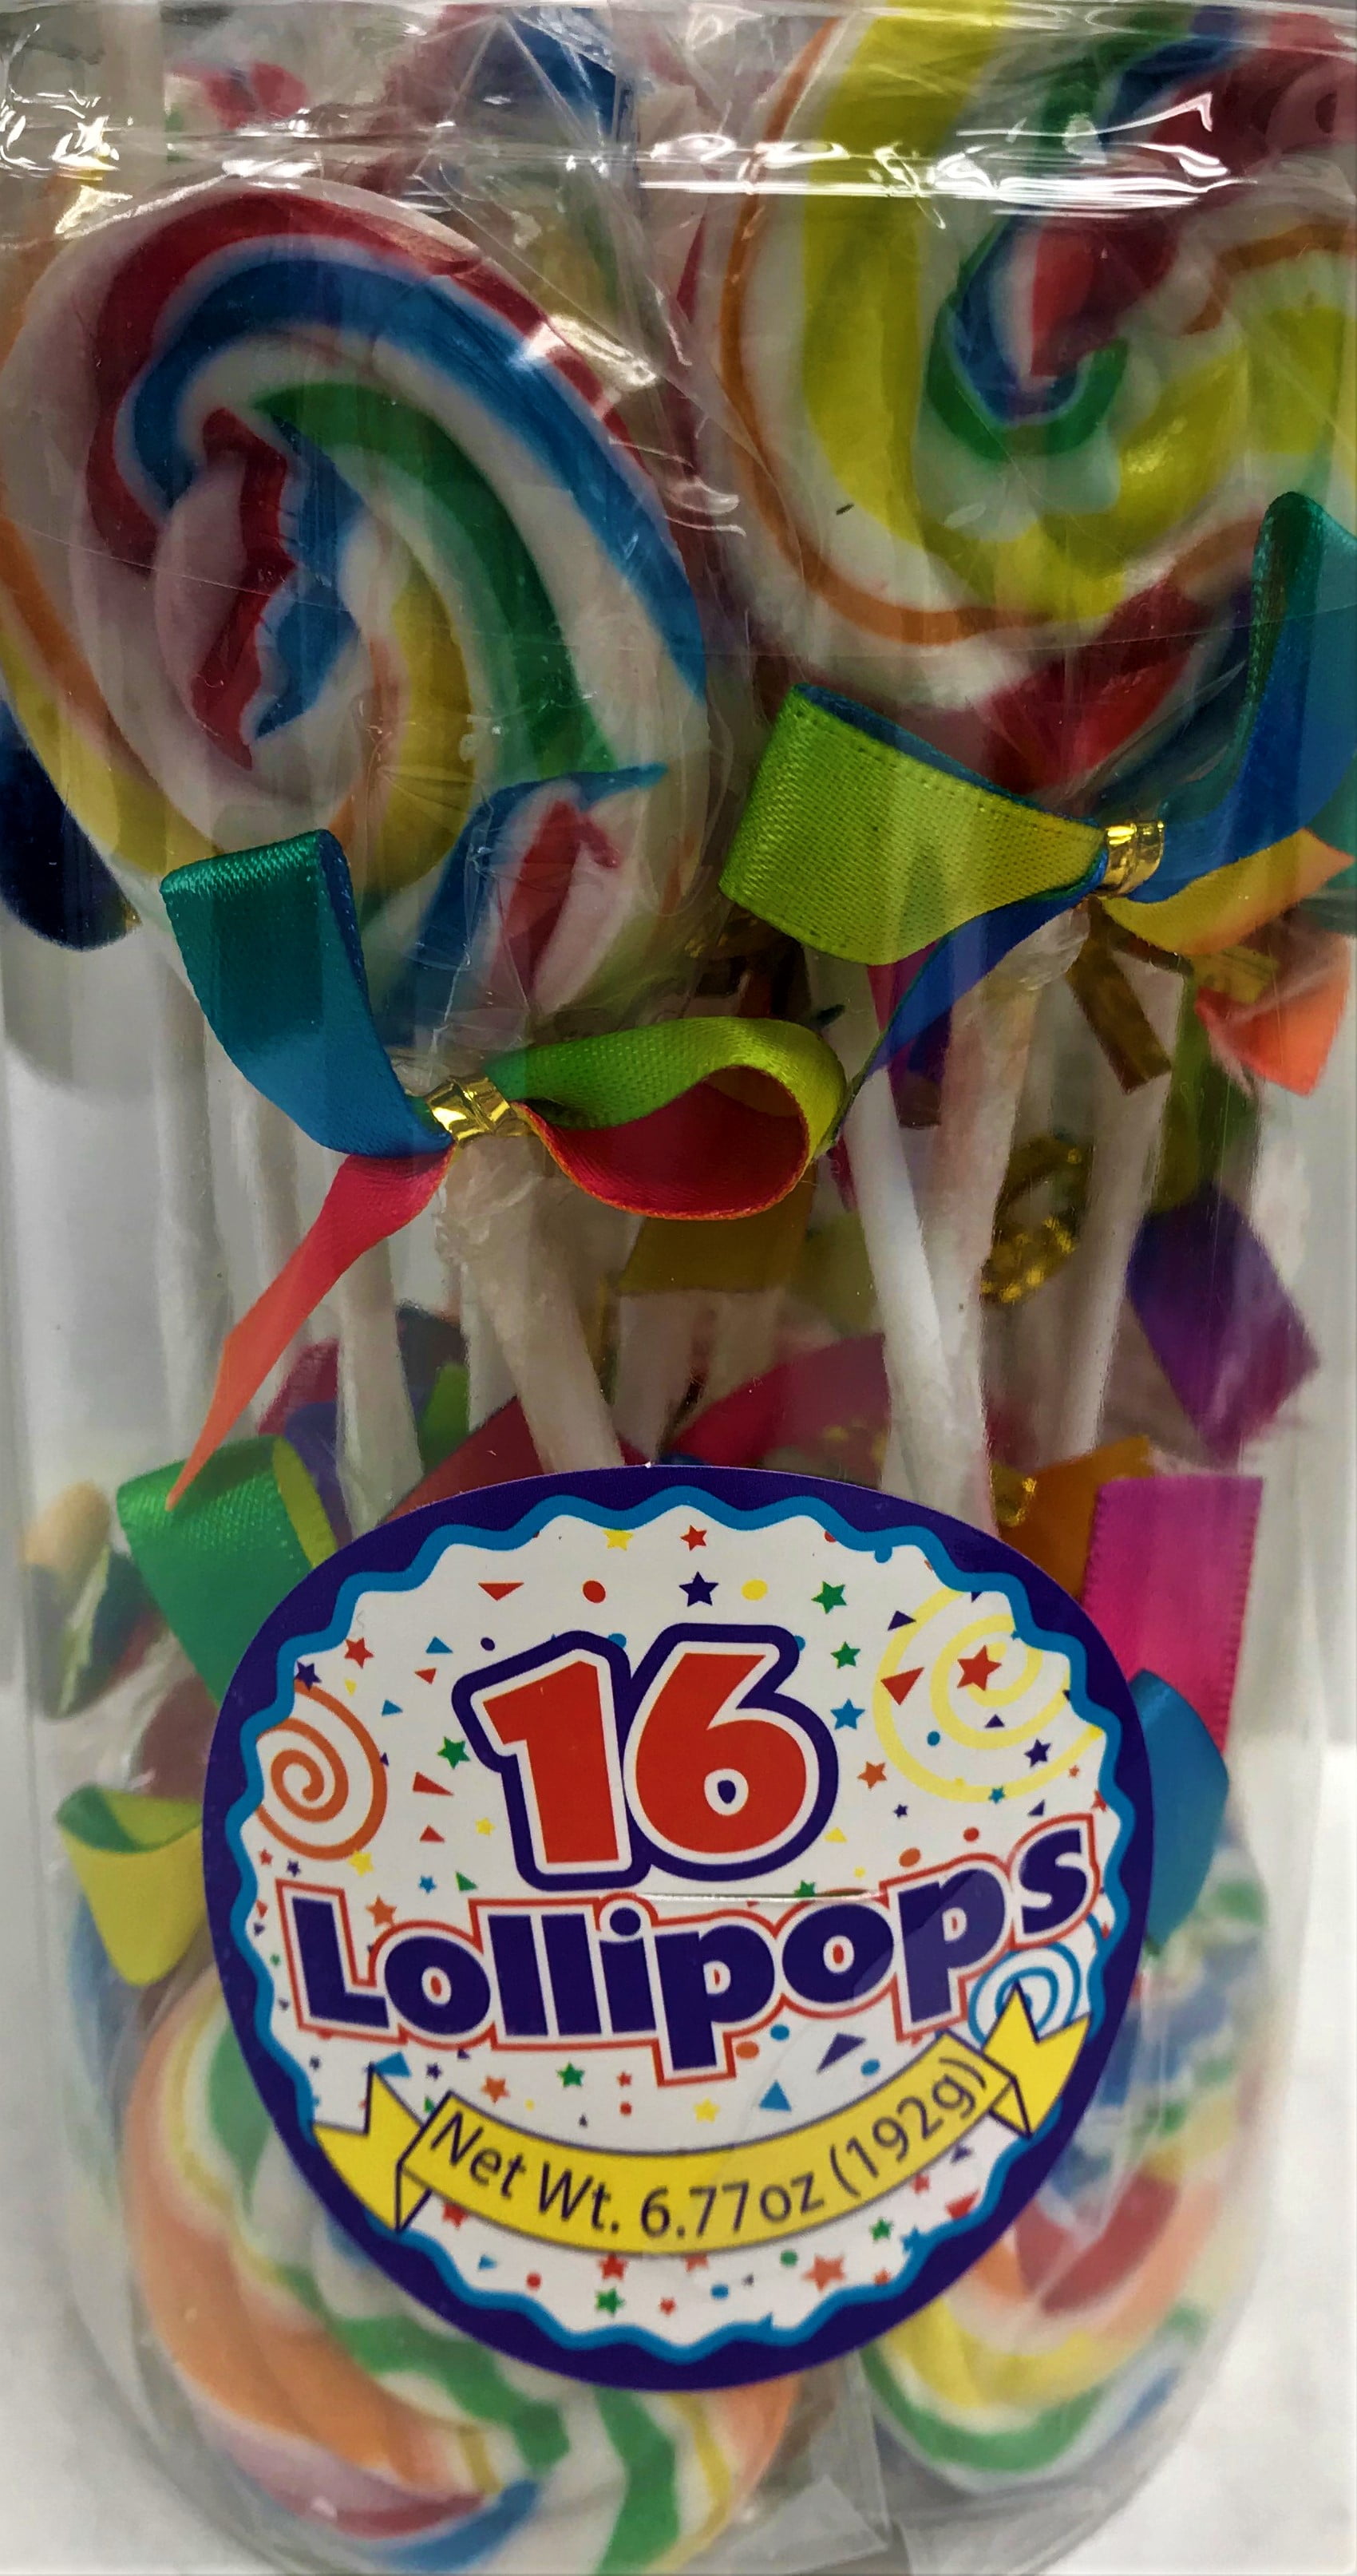 lifesaver swirl lollipops